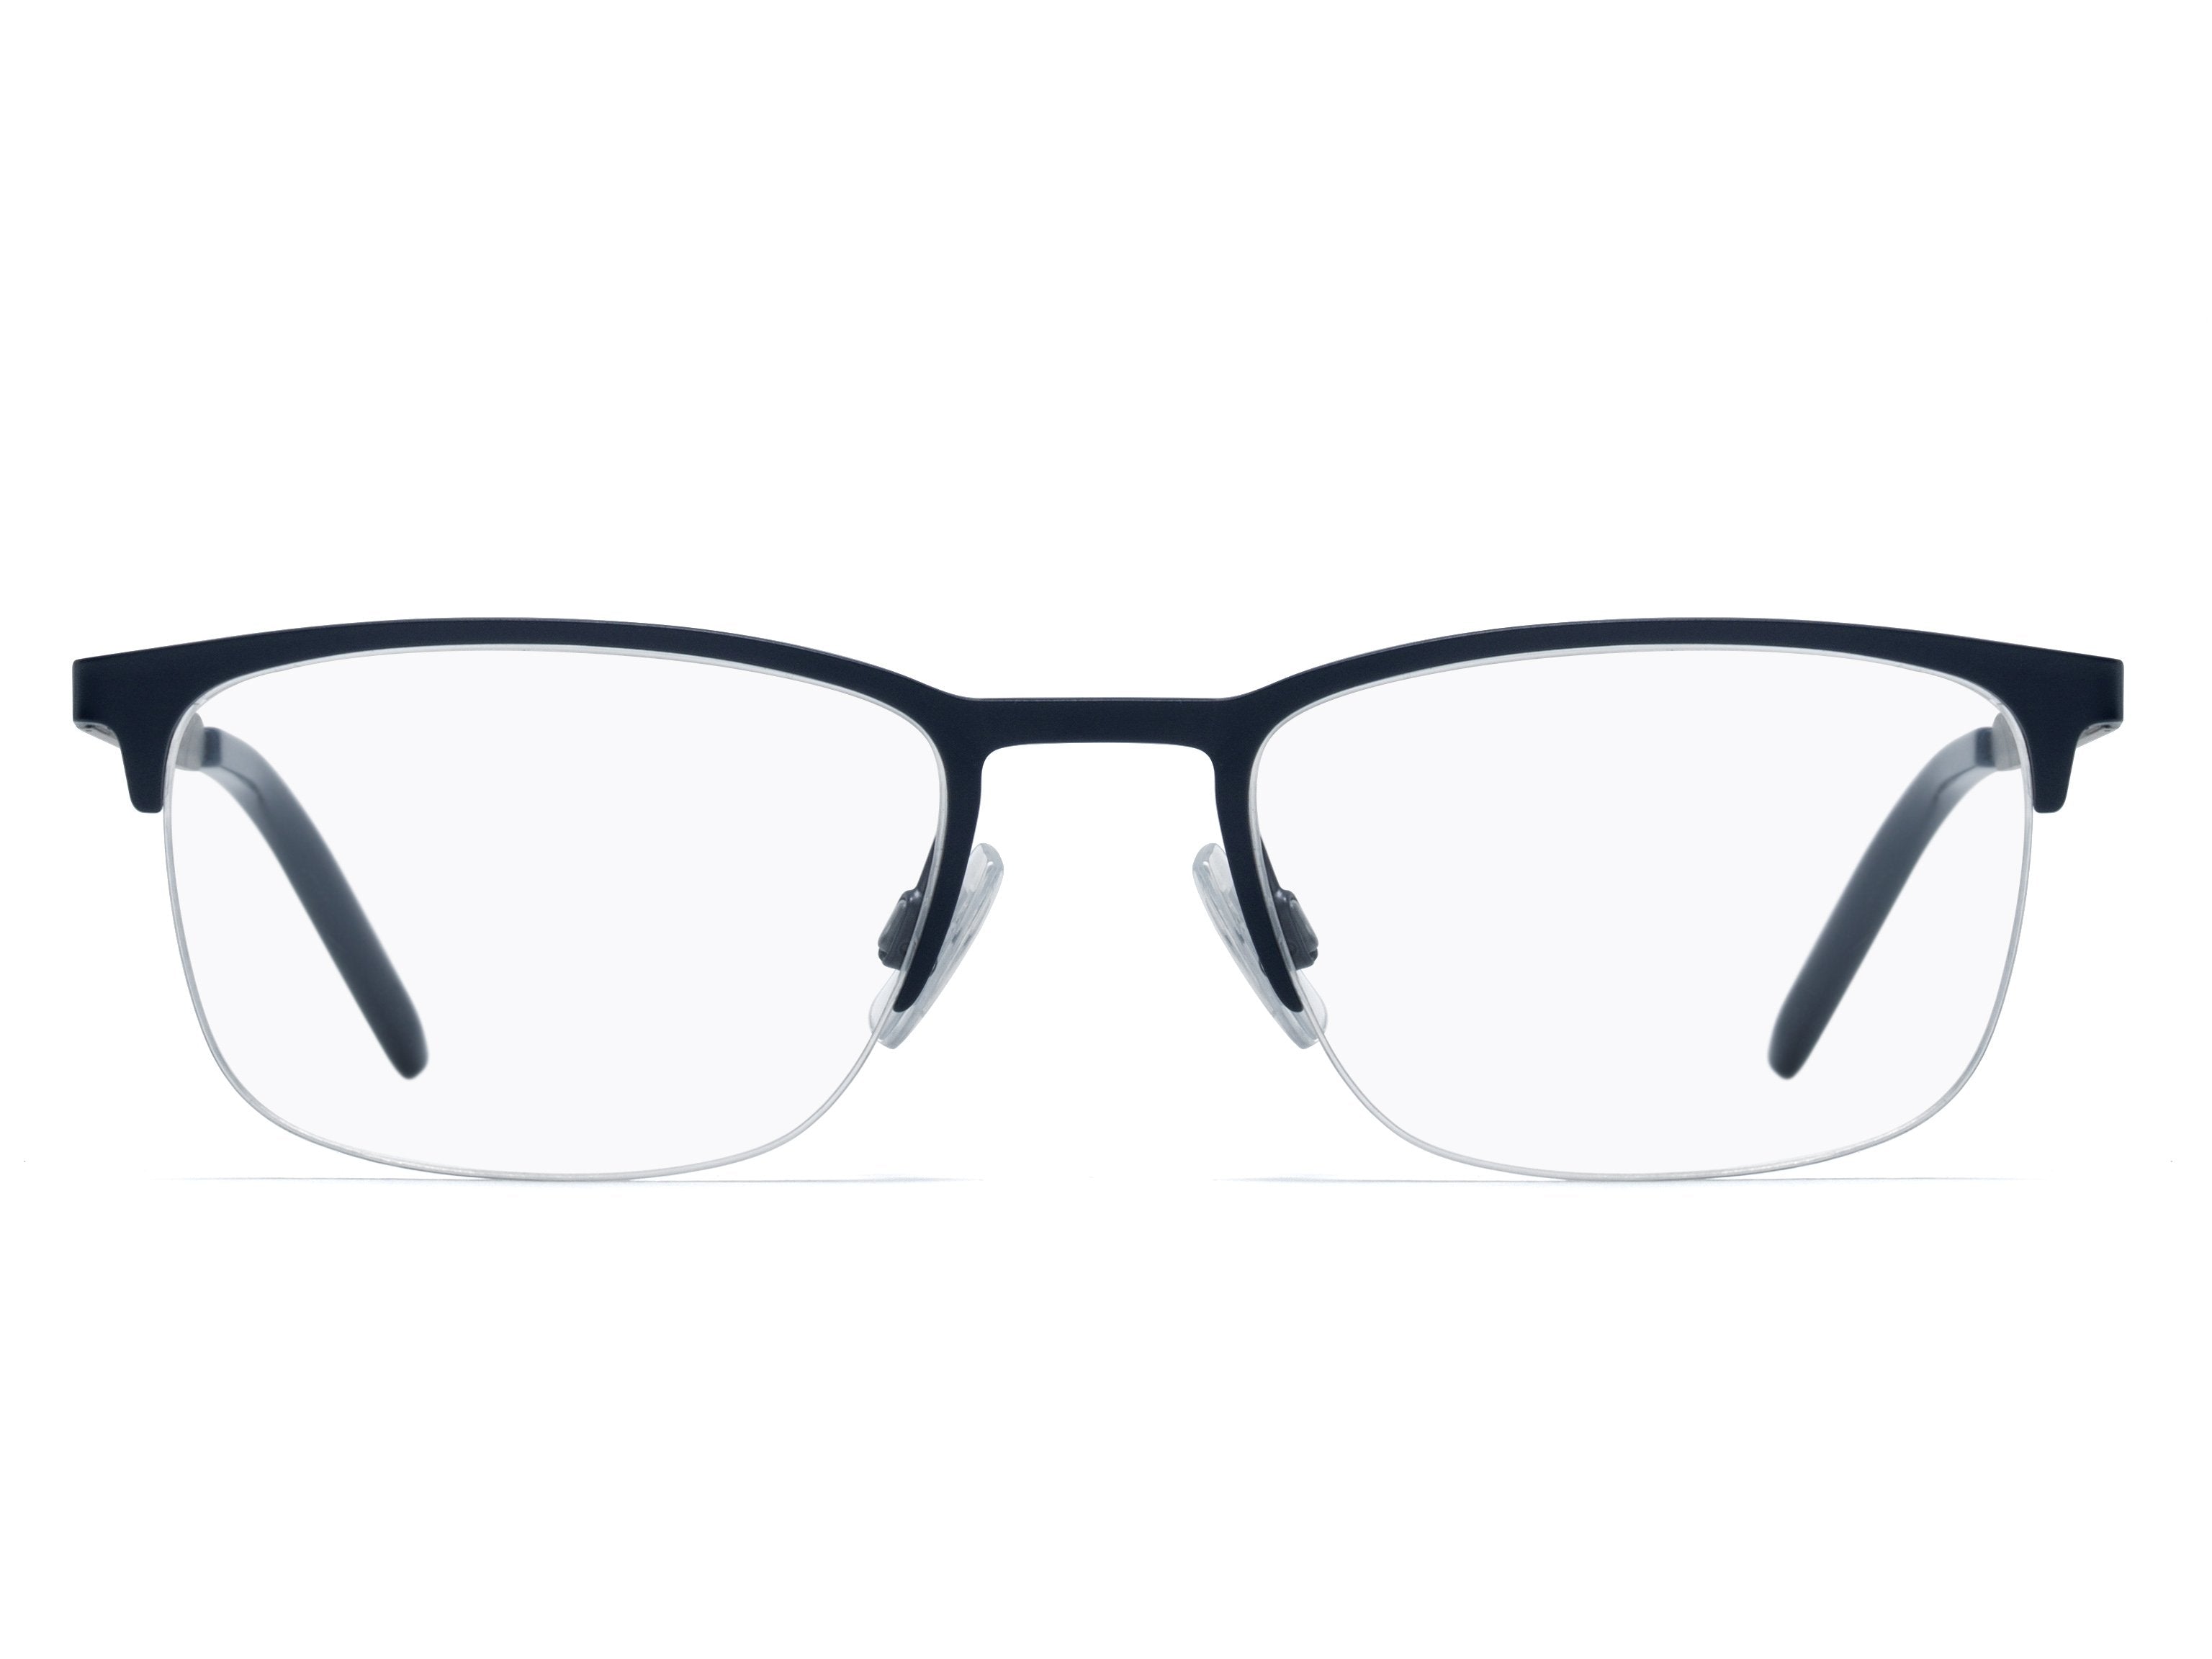 Hugo Eyeglasses Rectangular Man